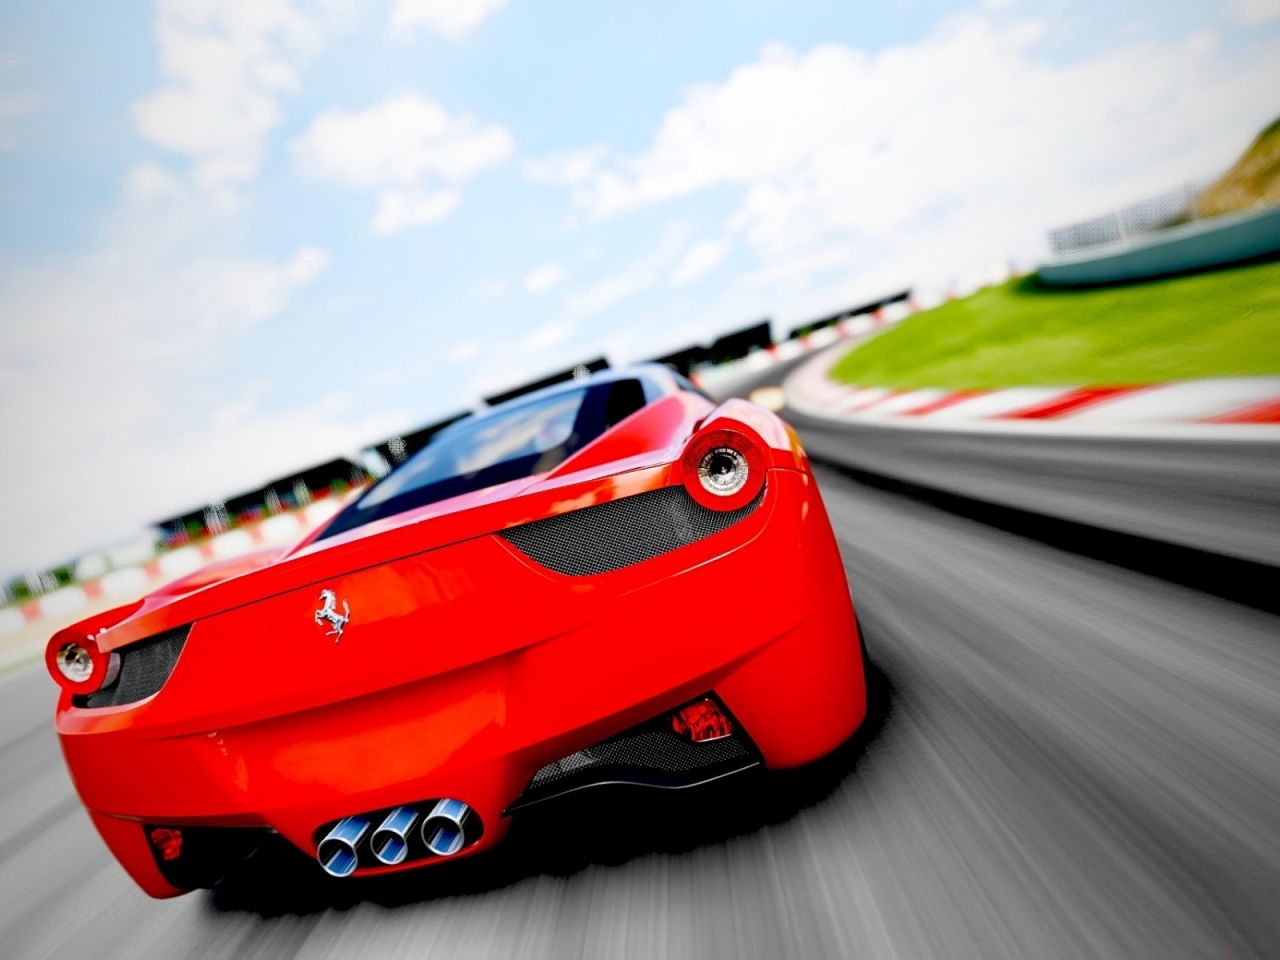 Gorgeous Red Ferrari for 1280 x 960 resolution